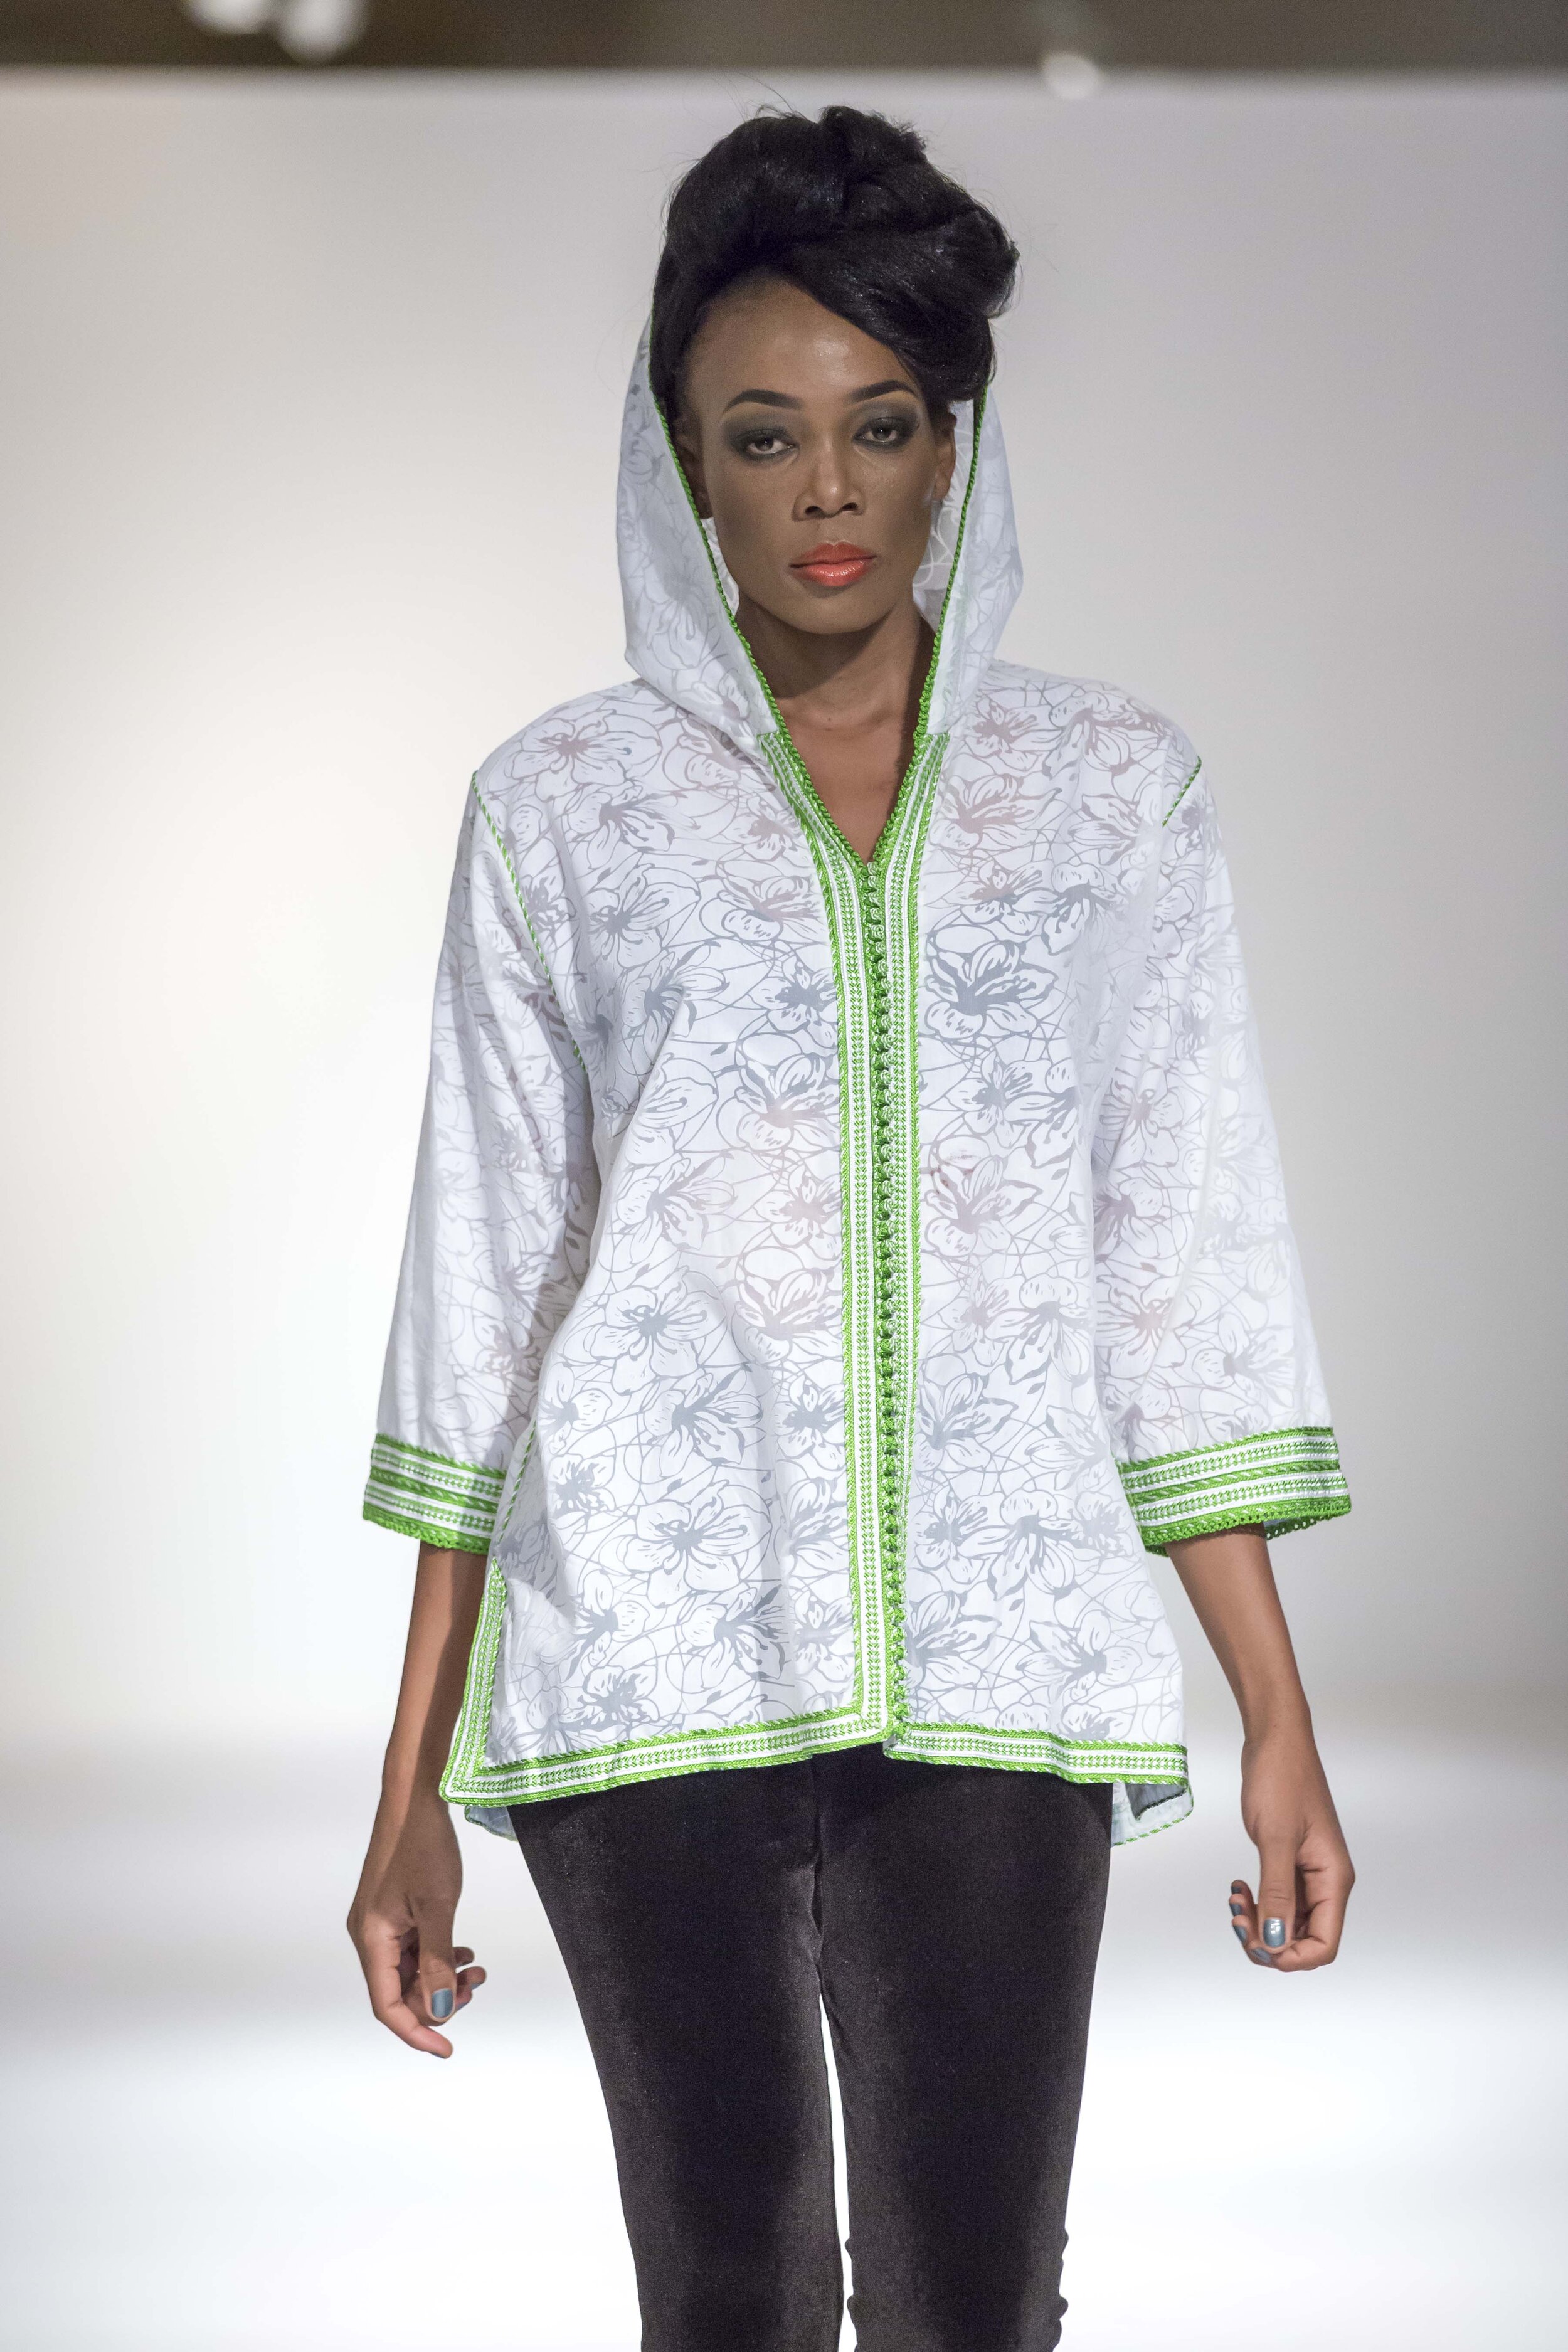 366.Africa-Fashion-Week-New-York-Runway-Show-Morocco-Caftan-New-York1.jpg